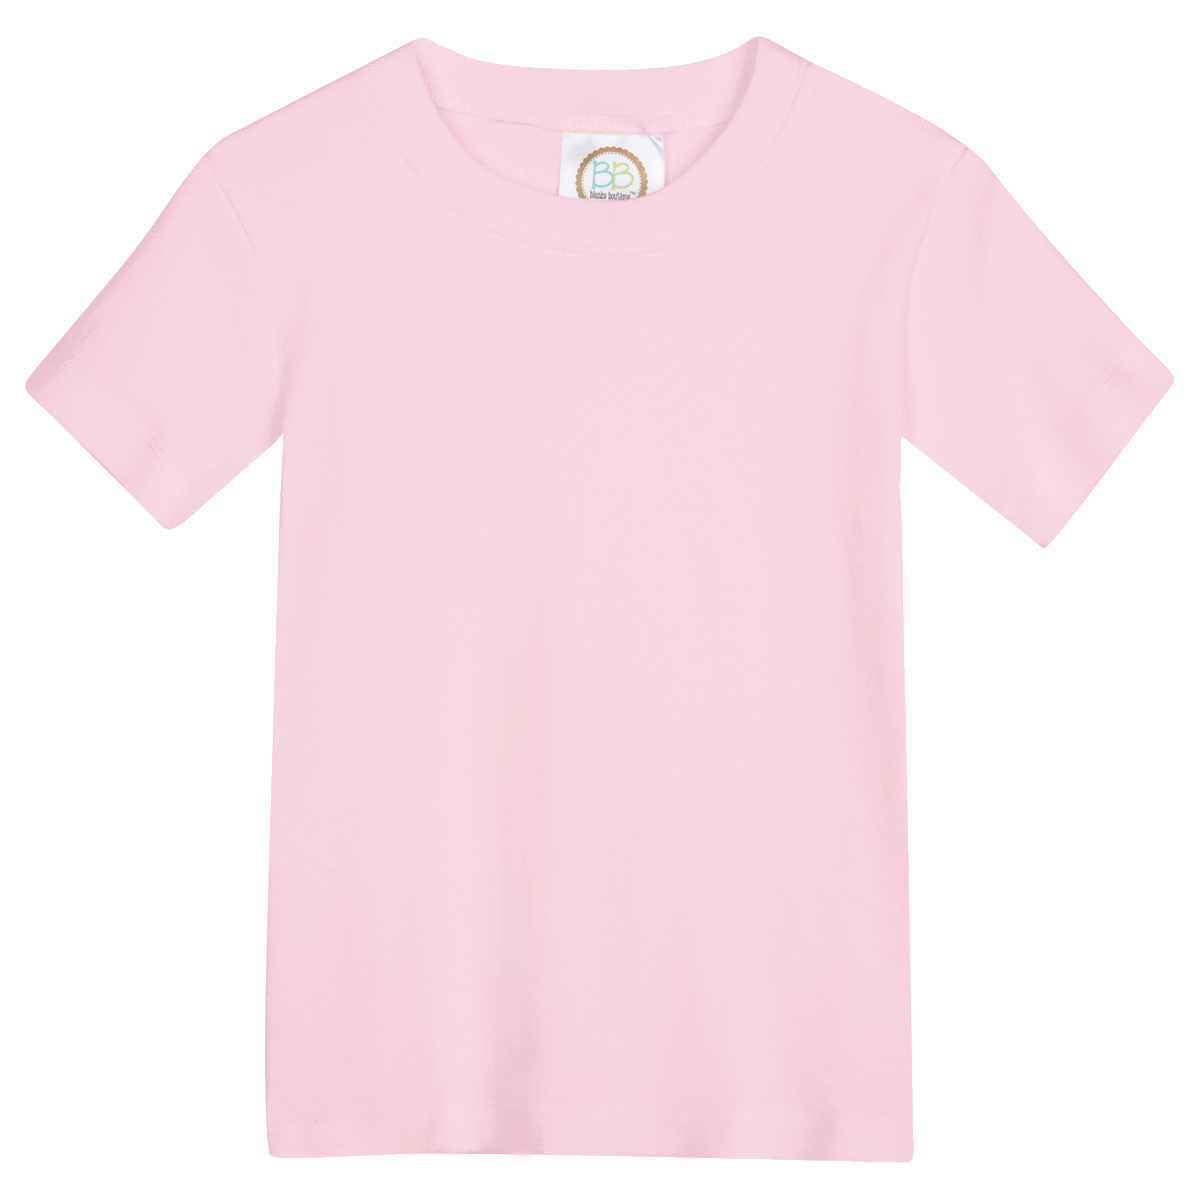 Blanks Boutique Blank Boy's Long Sleeve Tee Shirt